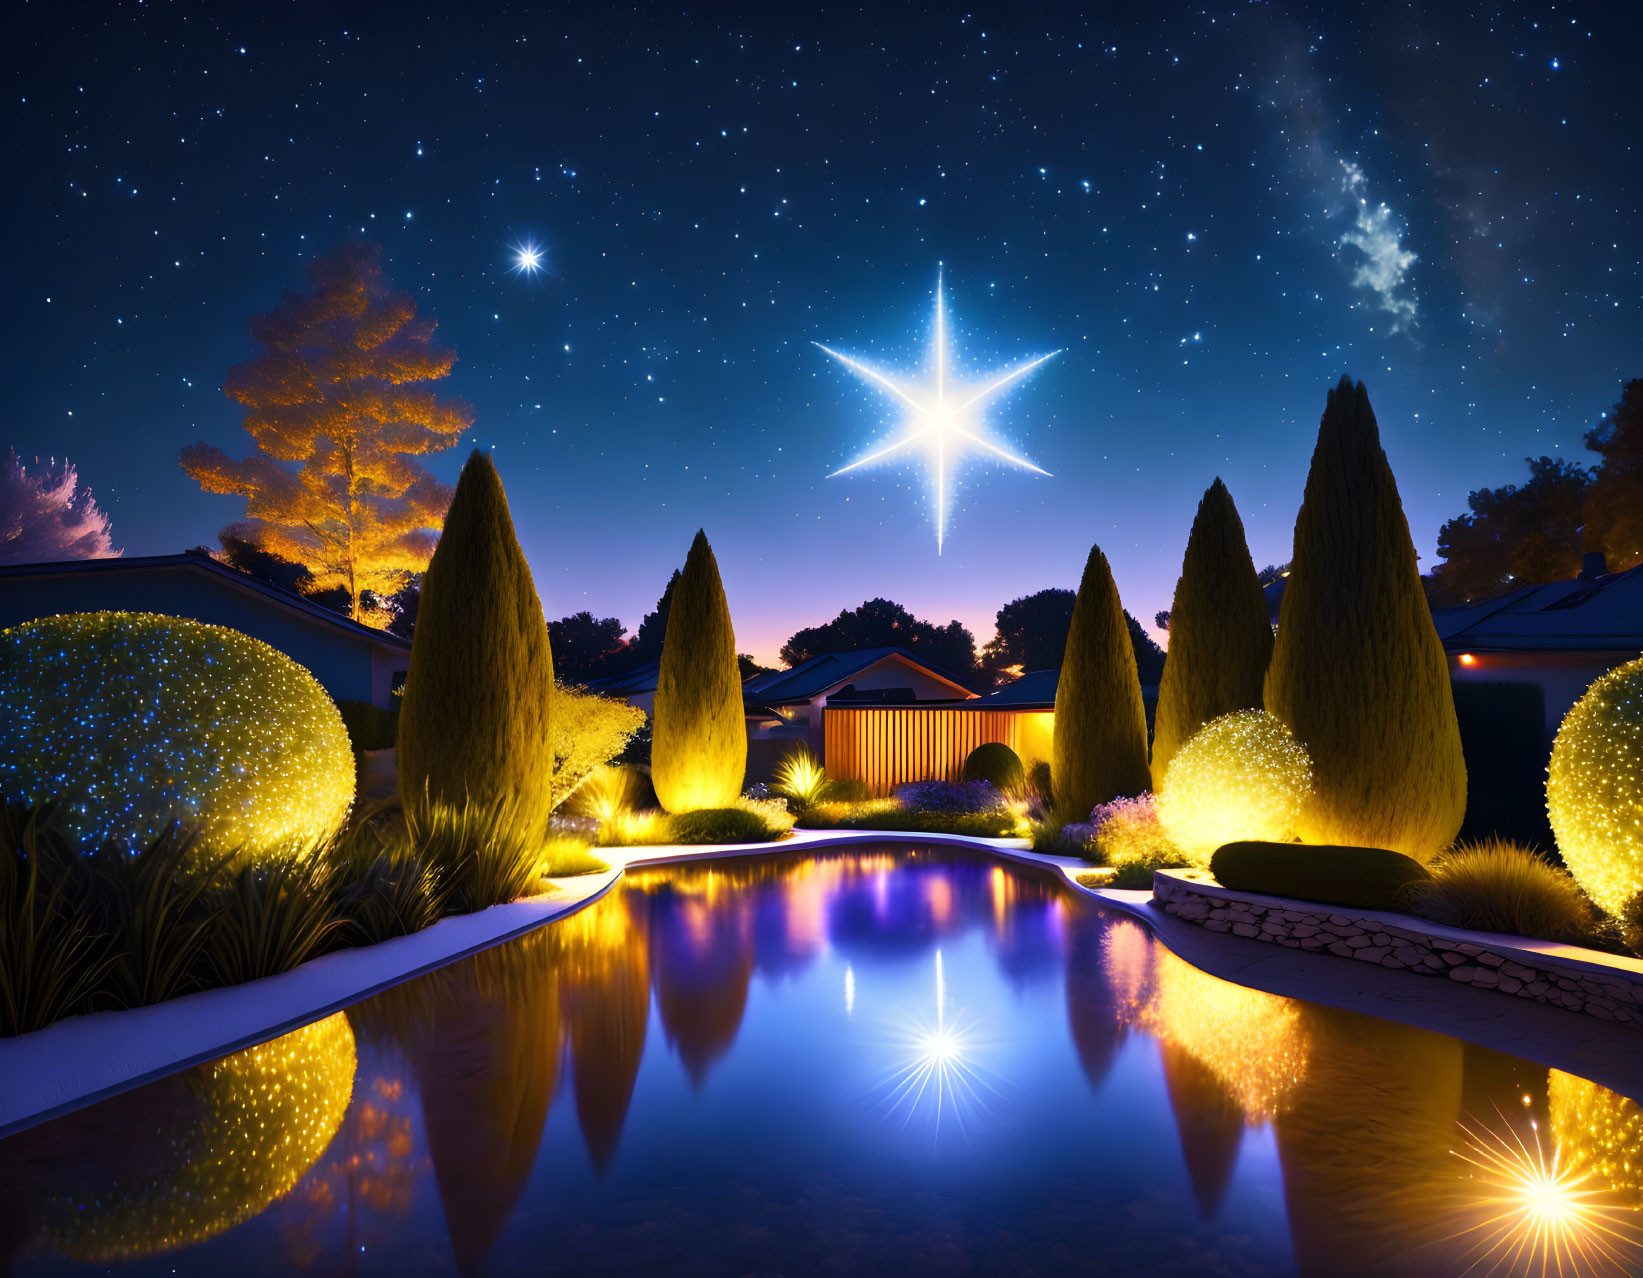 Tranquil backyard night scene with illuminated topiaries and starlit sky